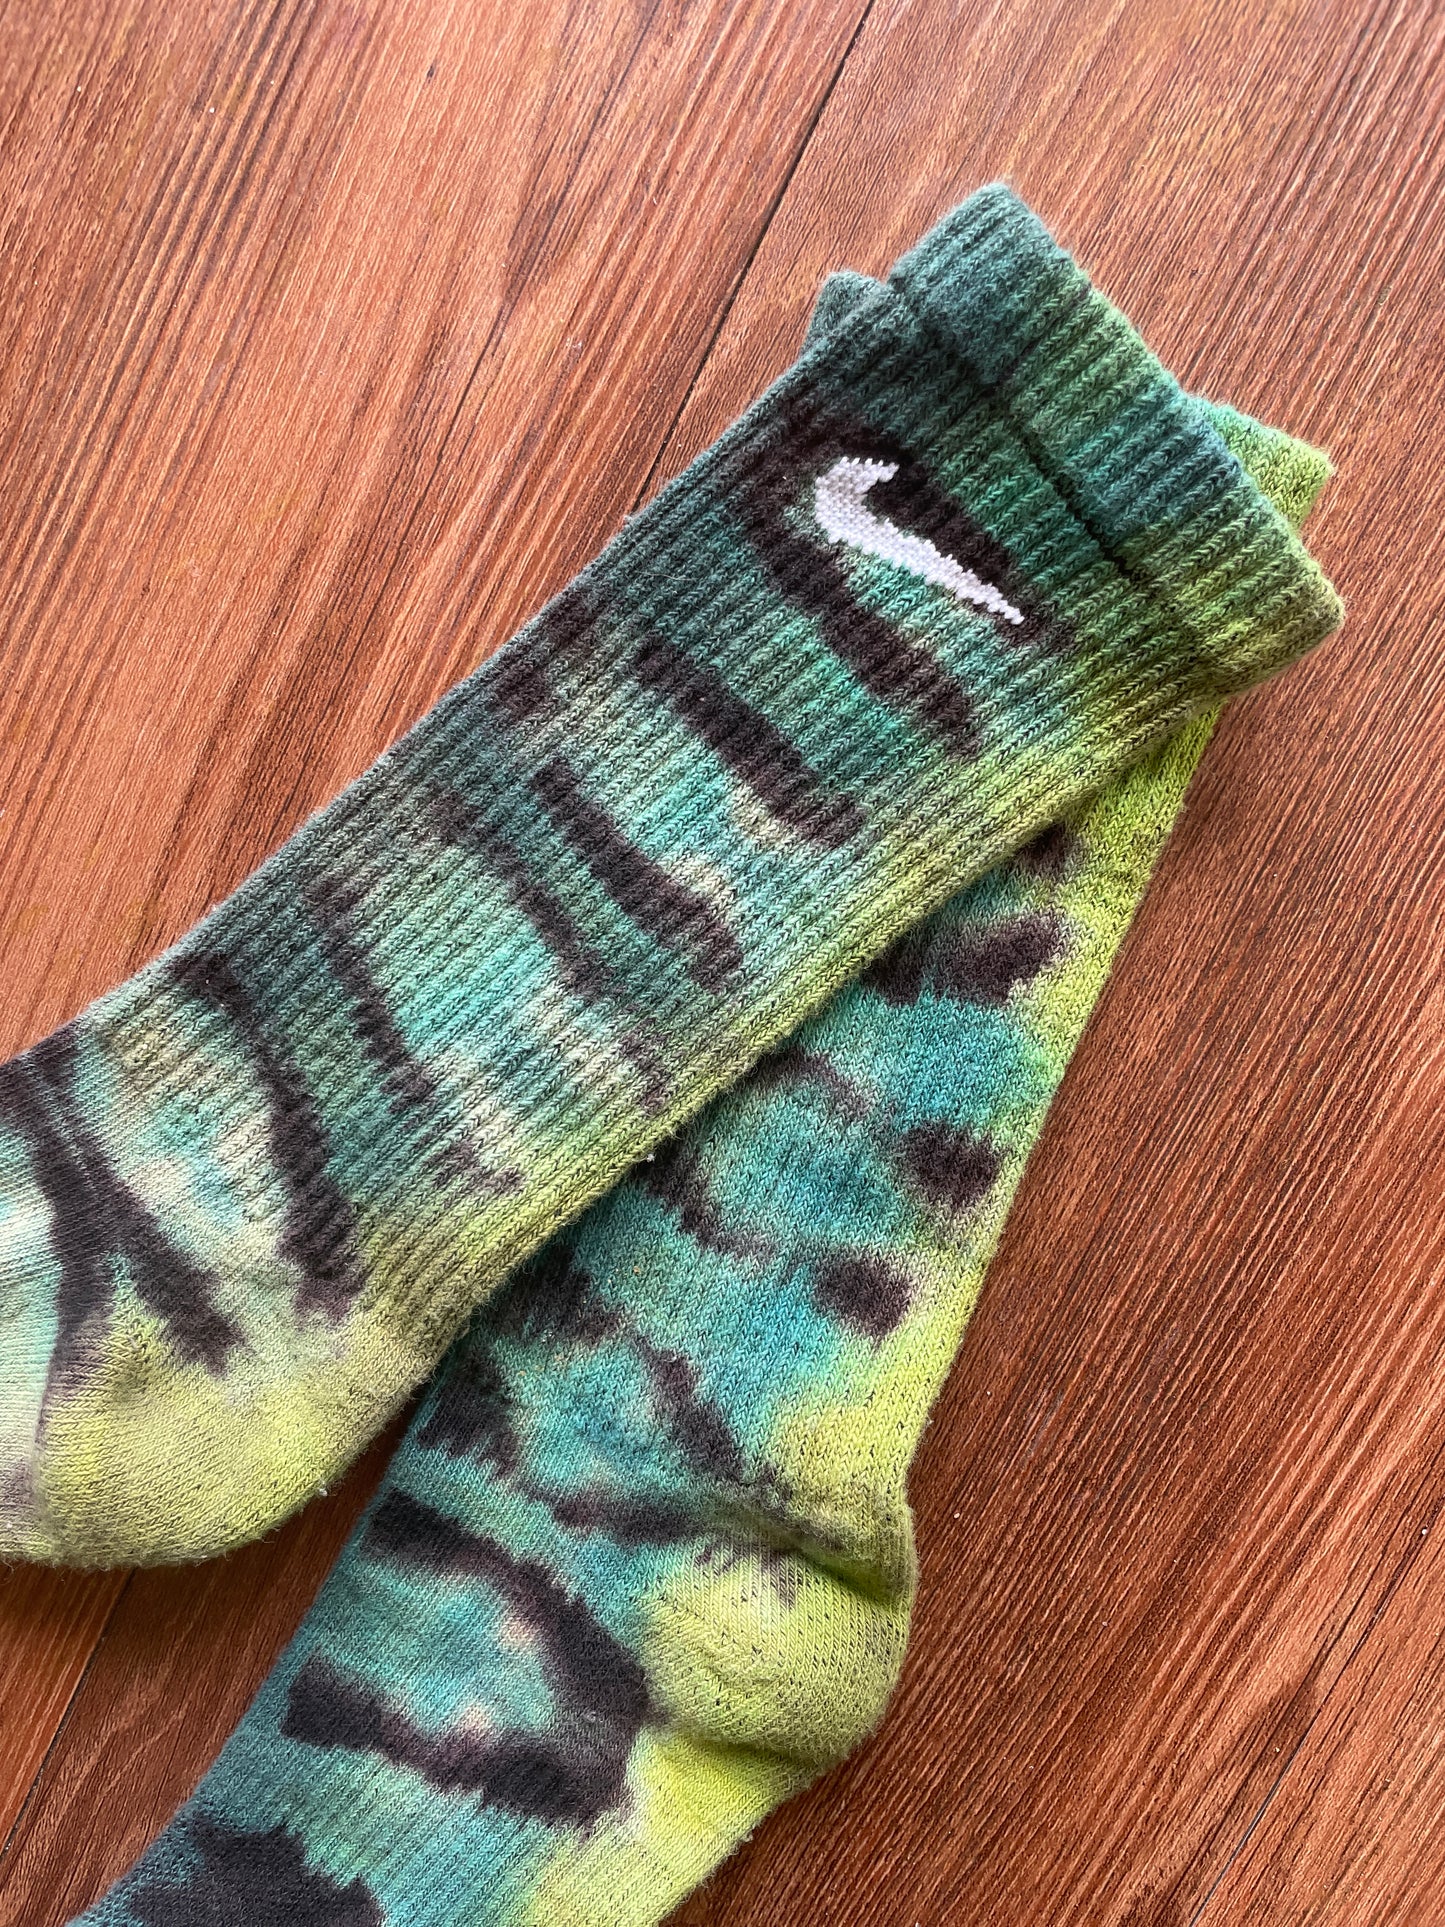 Bright Green, Blue, and Black Reverse Tie Dye Nike Dri-FIT Training Socks - Size Medium (Men's 6-8/Women's 7-10)